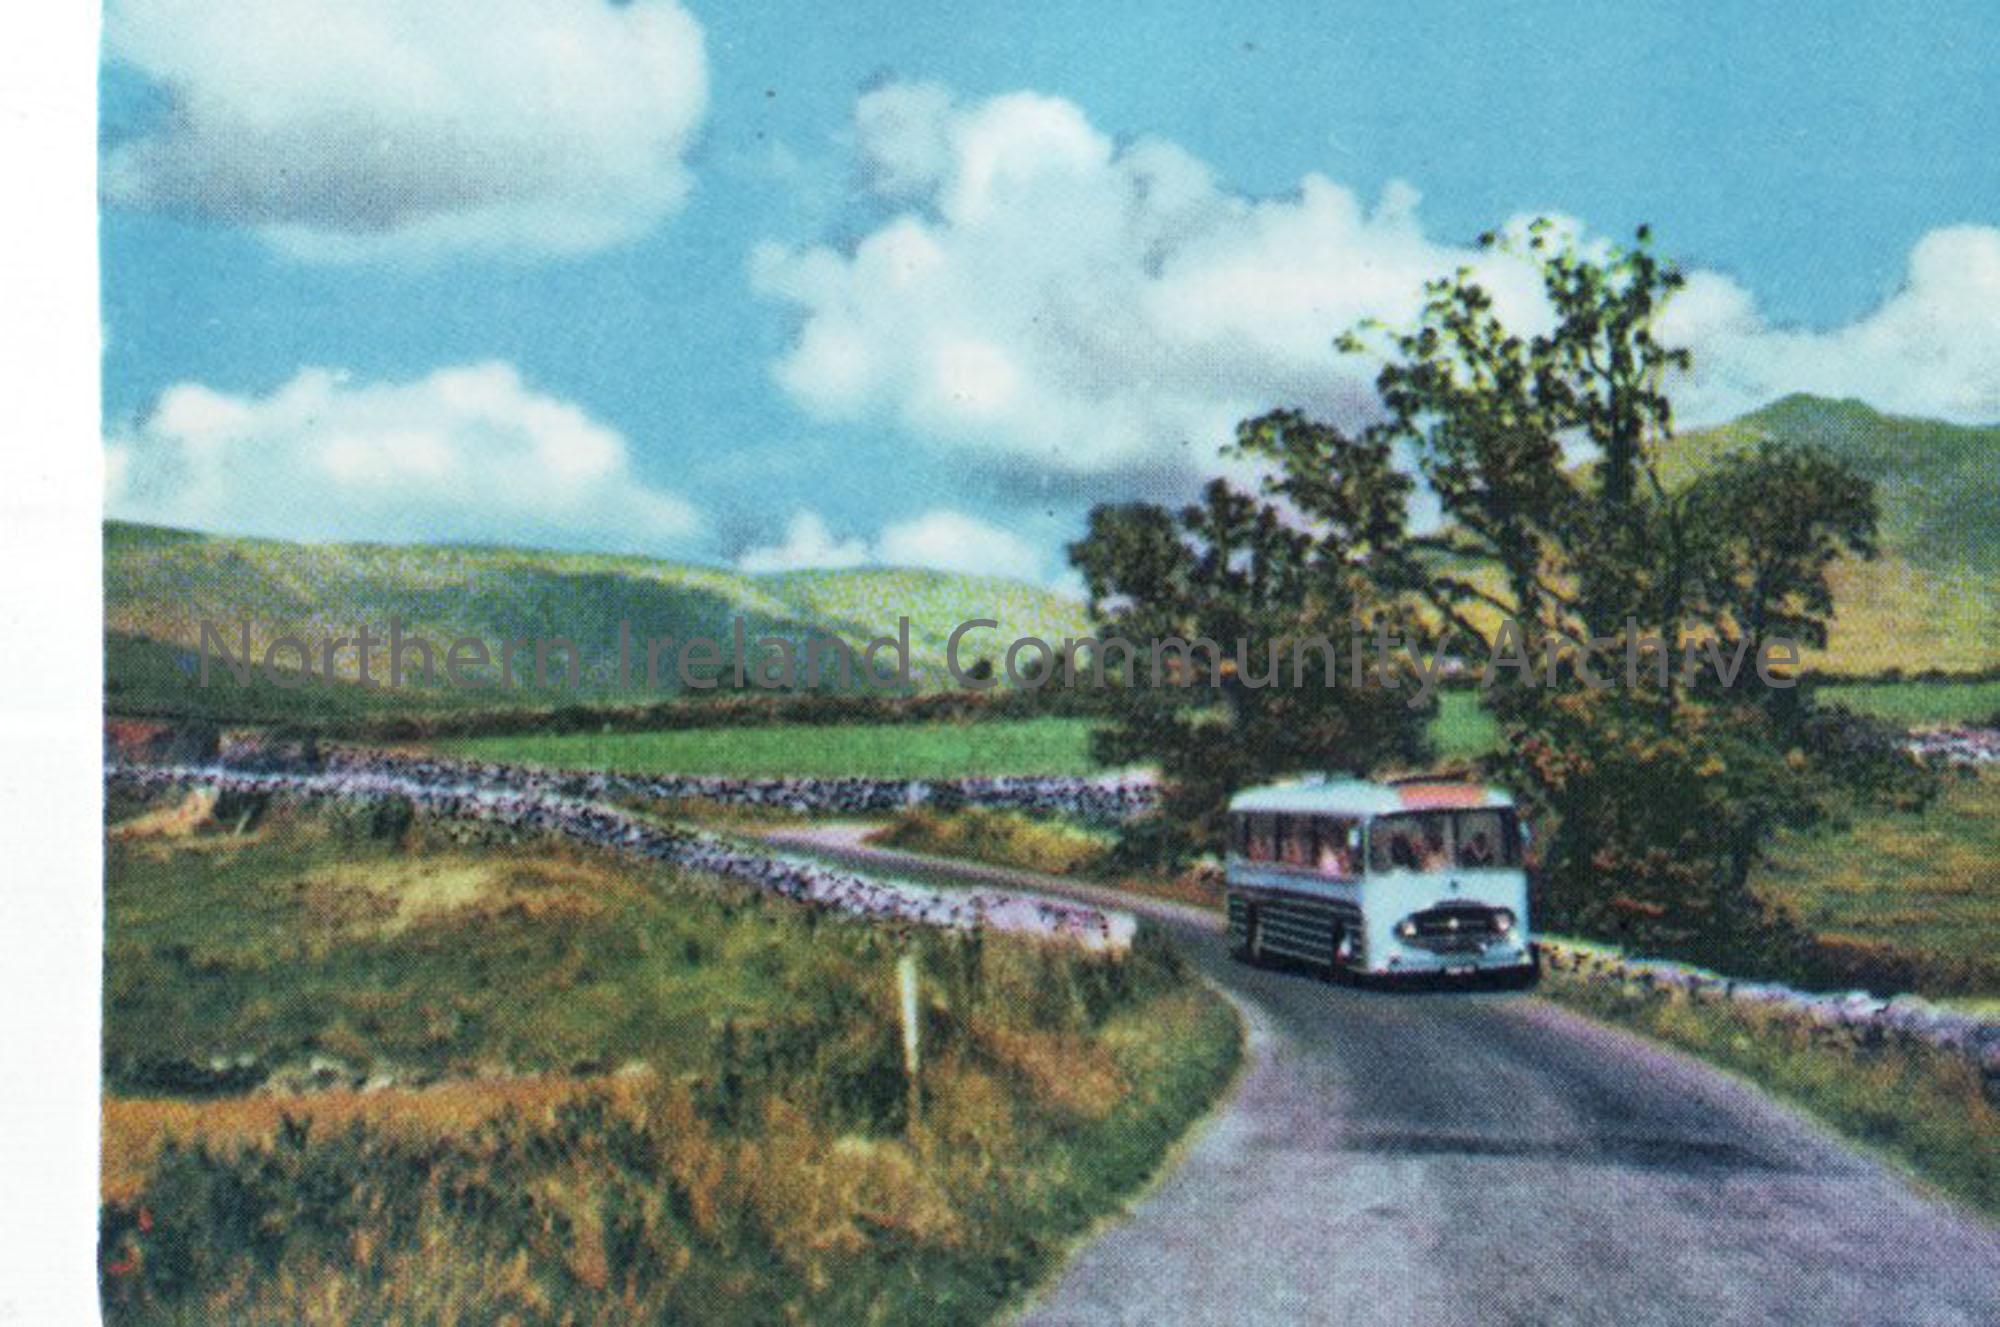 Ulster Transport Authority calendar, 1961